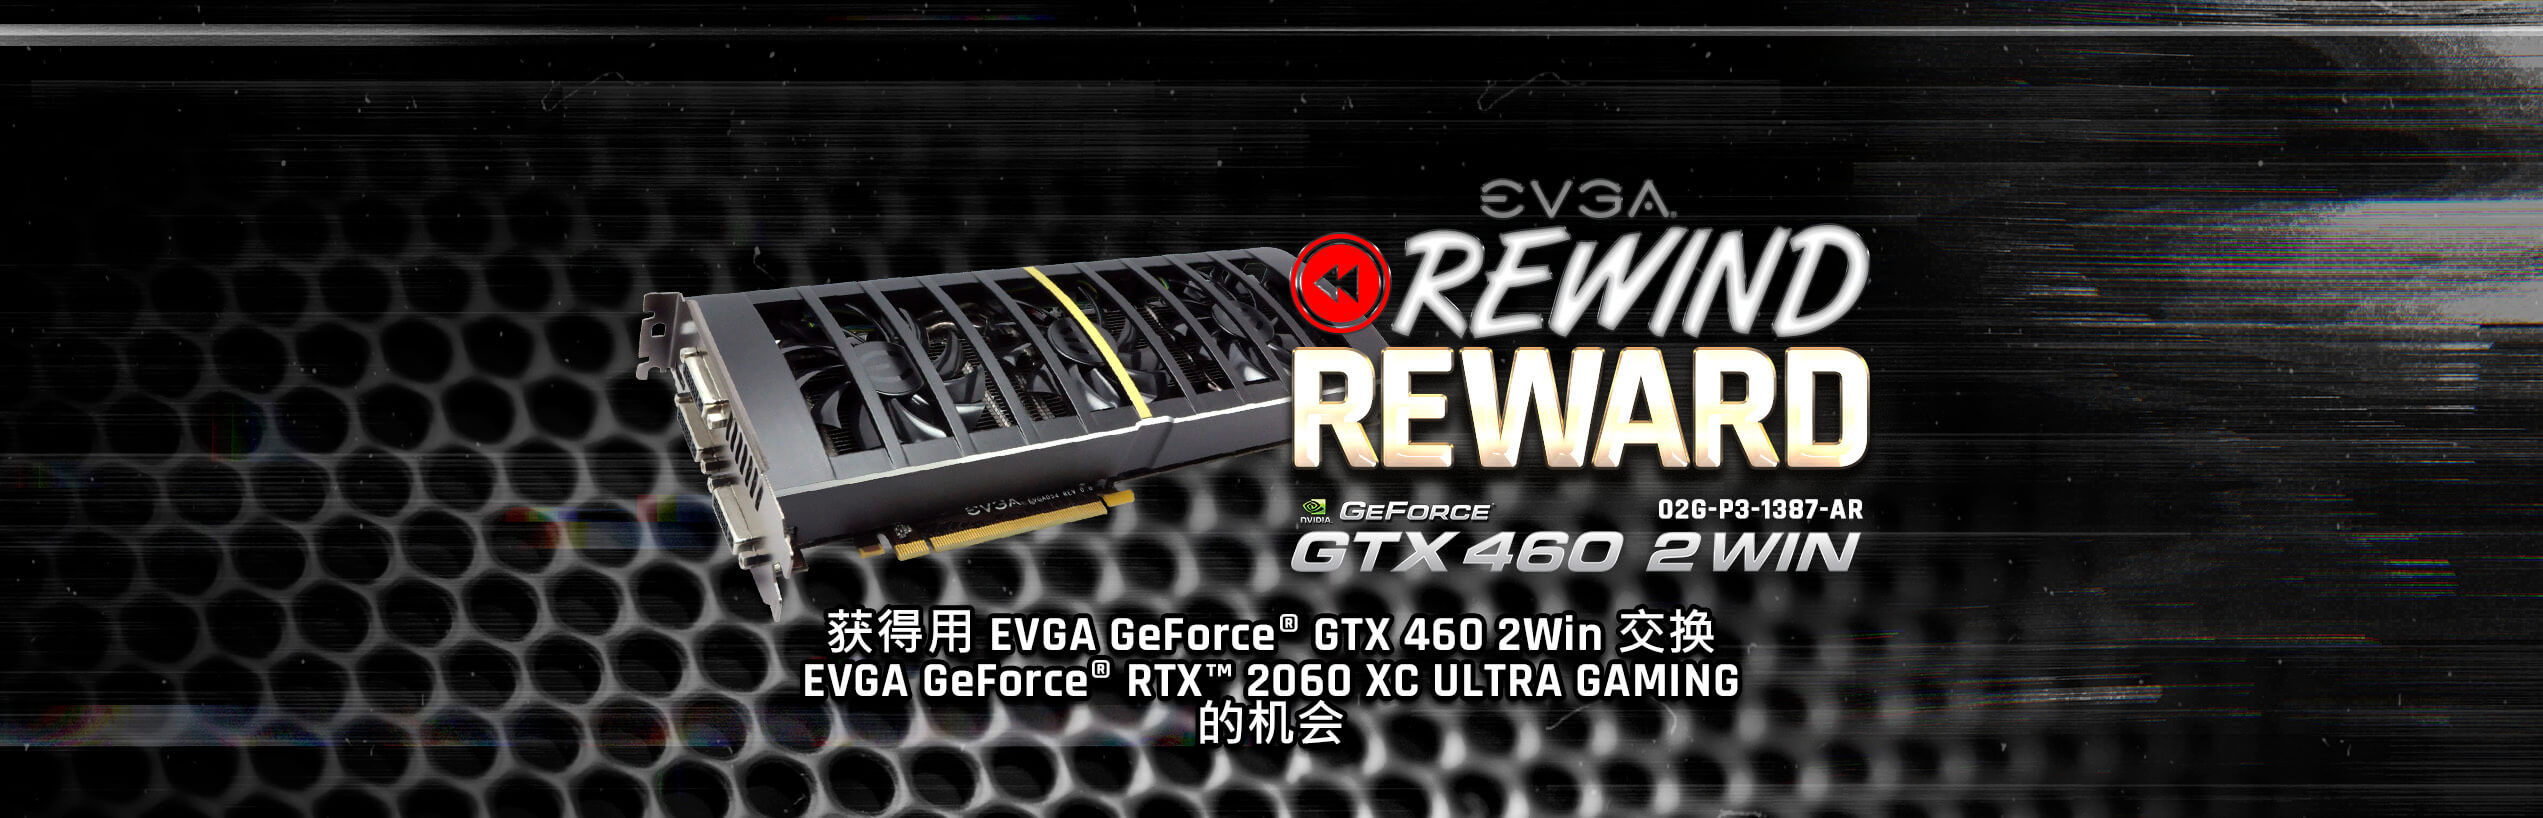 以 EVGA GeForce GTX 460 2Win 换取 EVGA GeForce RTX 2060 XC ULTRA GAMING 的机会